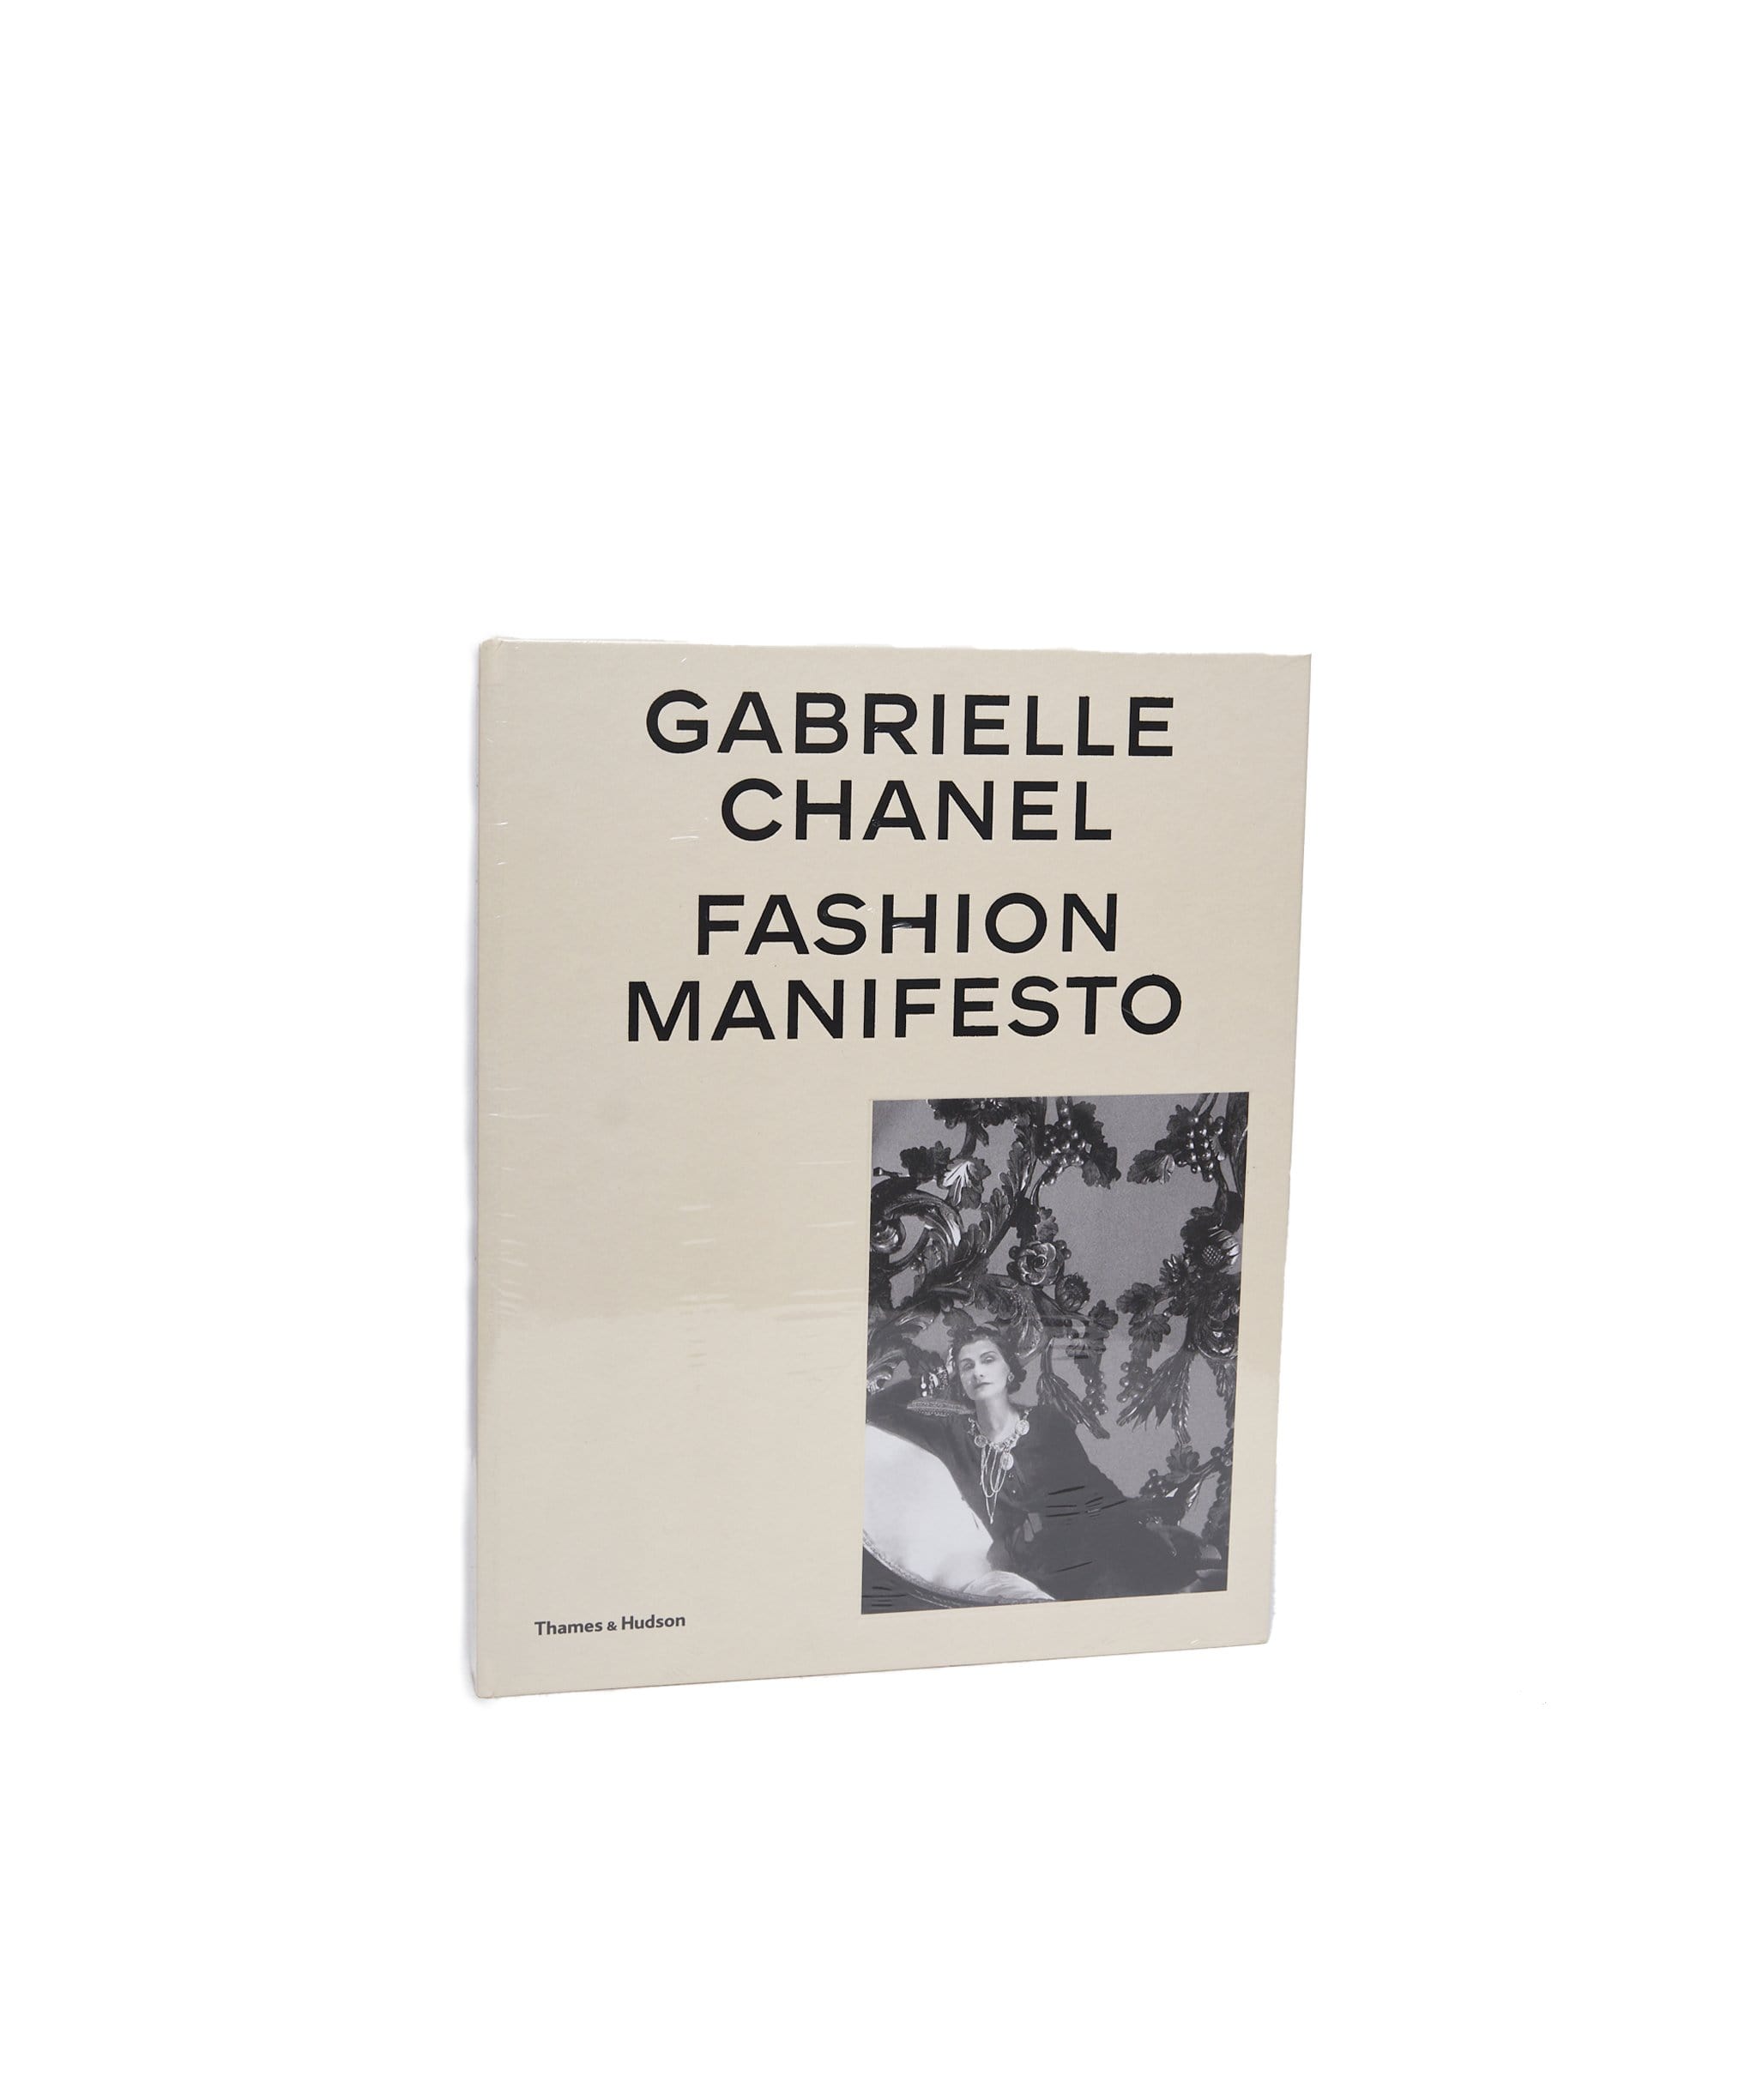 Gabrielle Chanel [Book]